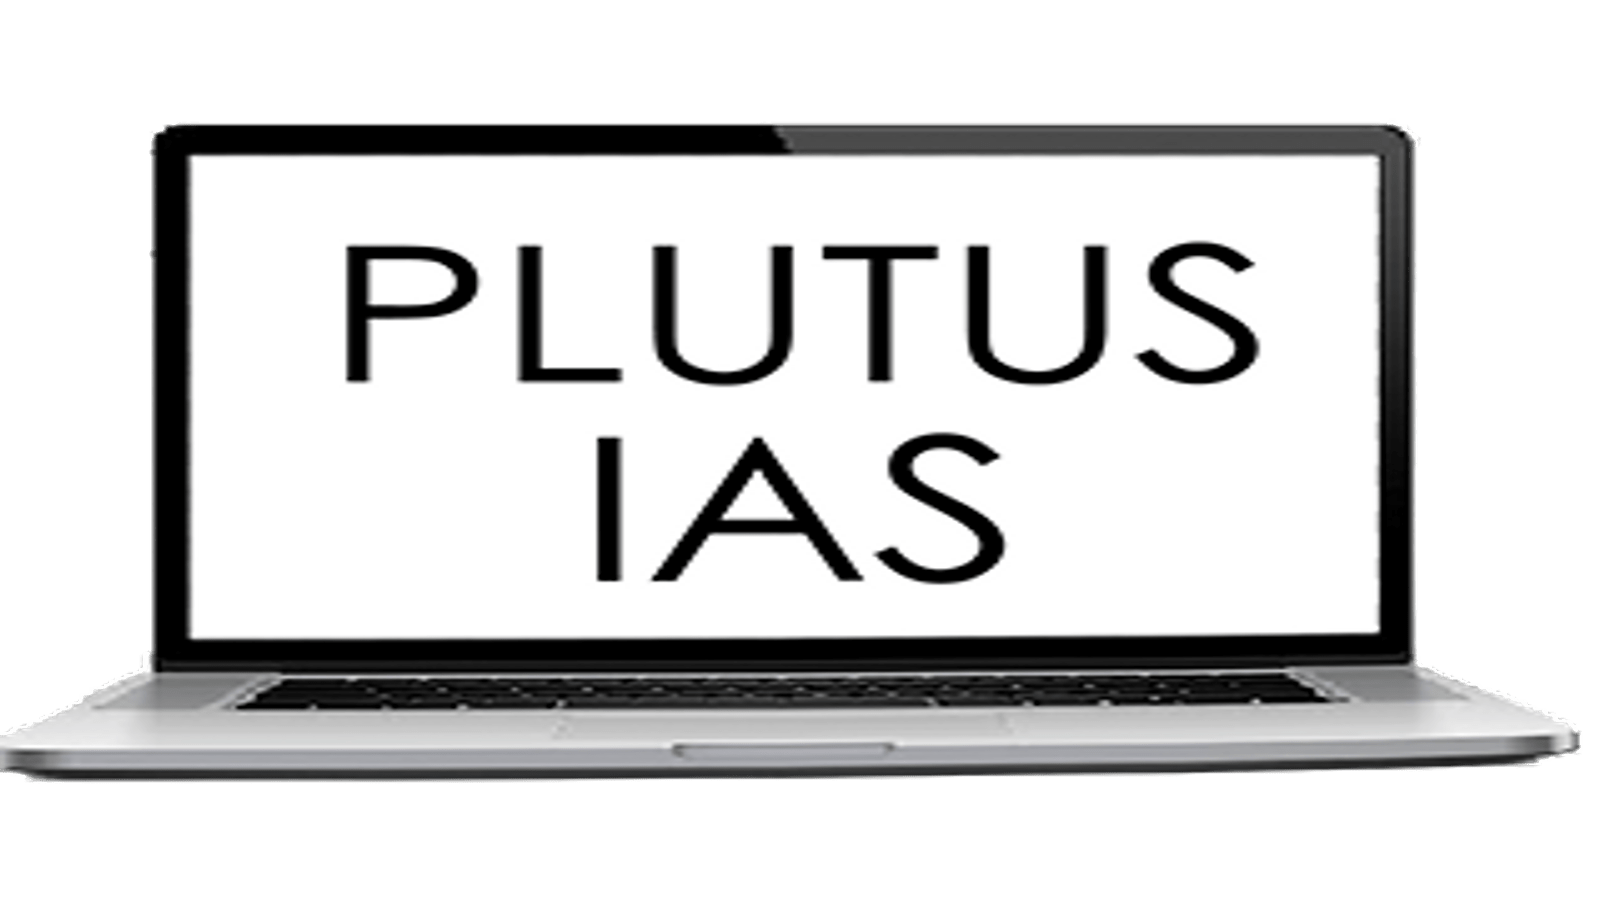 Plutus IAS Online Coaching Coimbatore